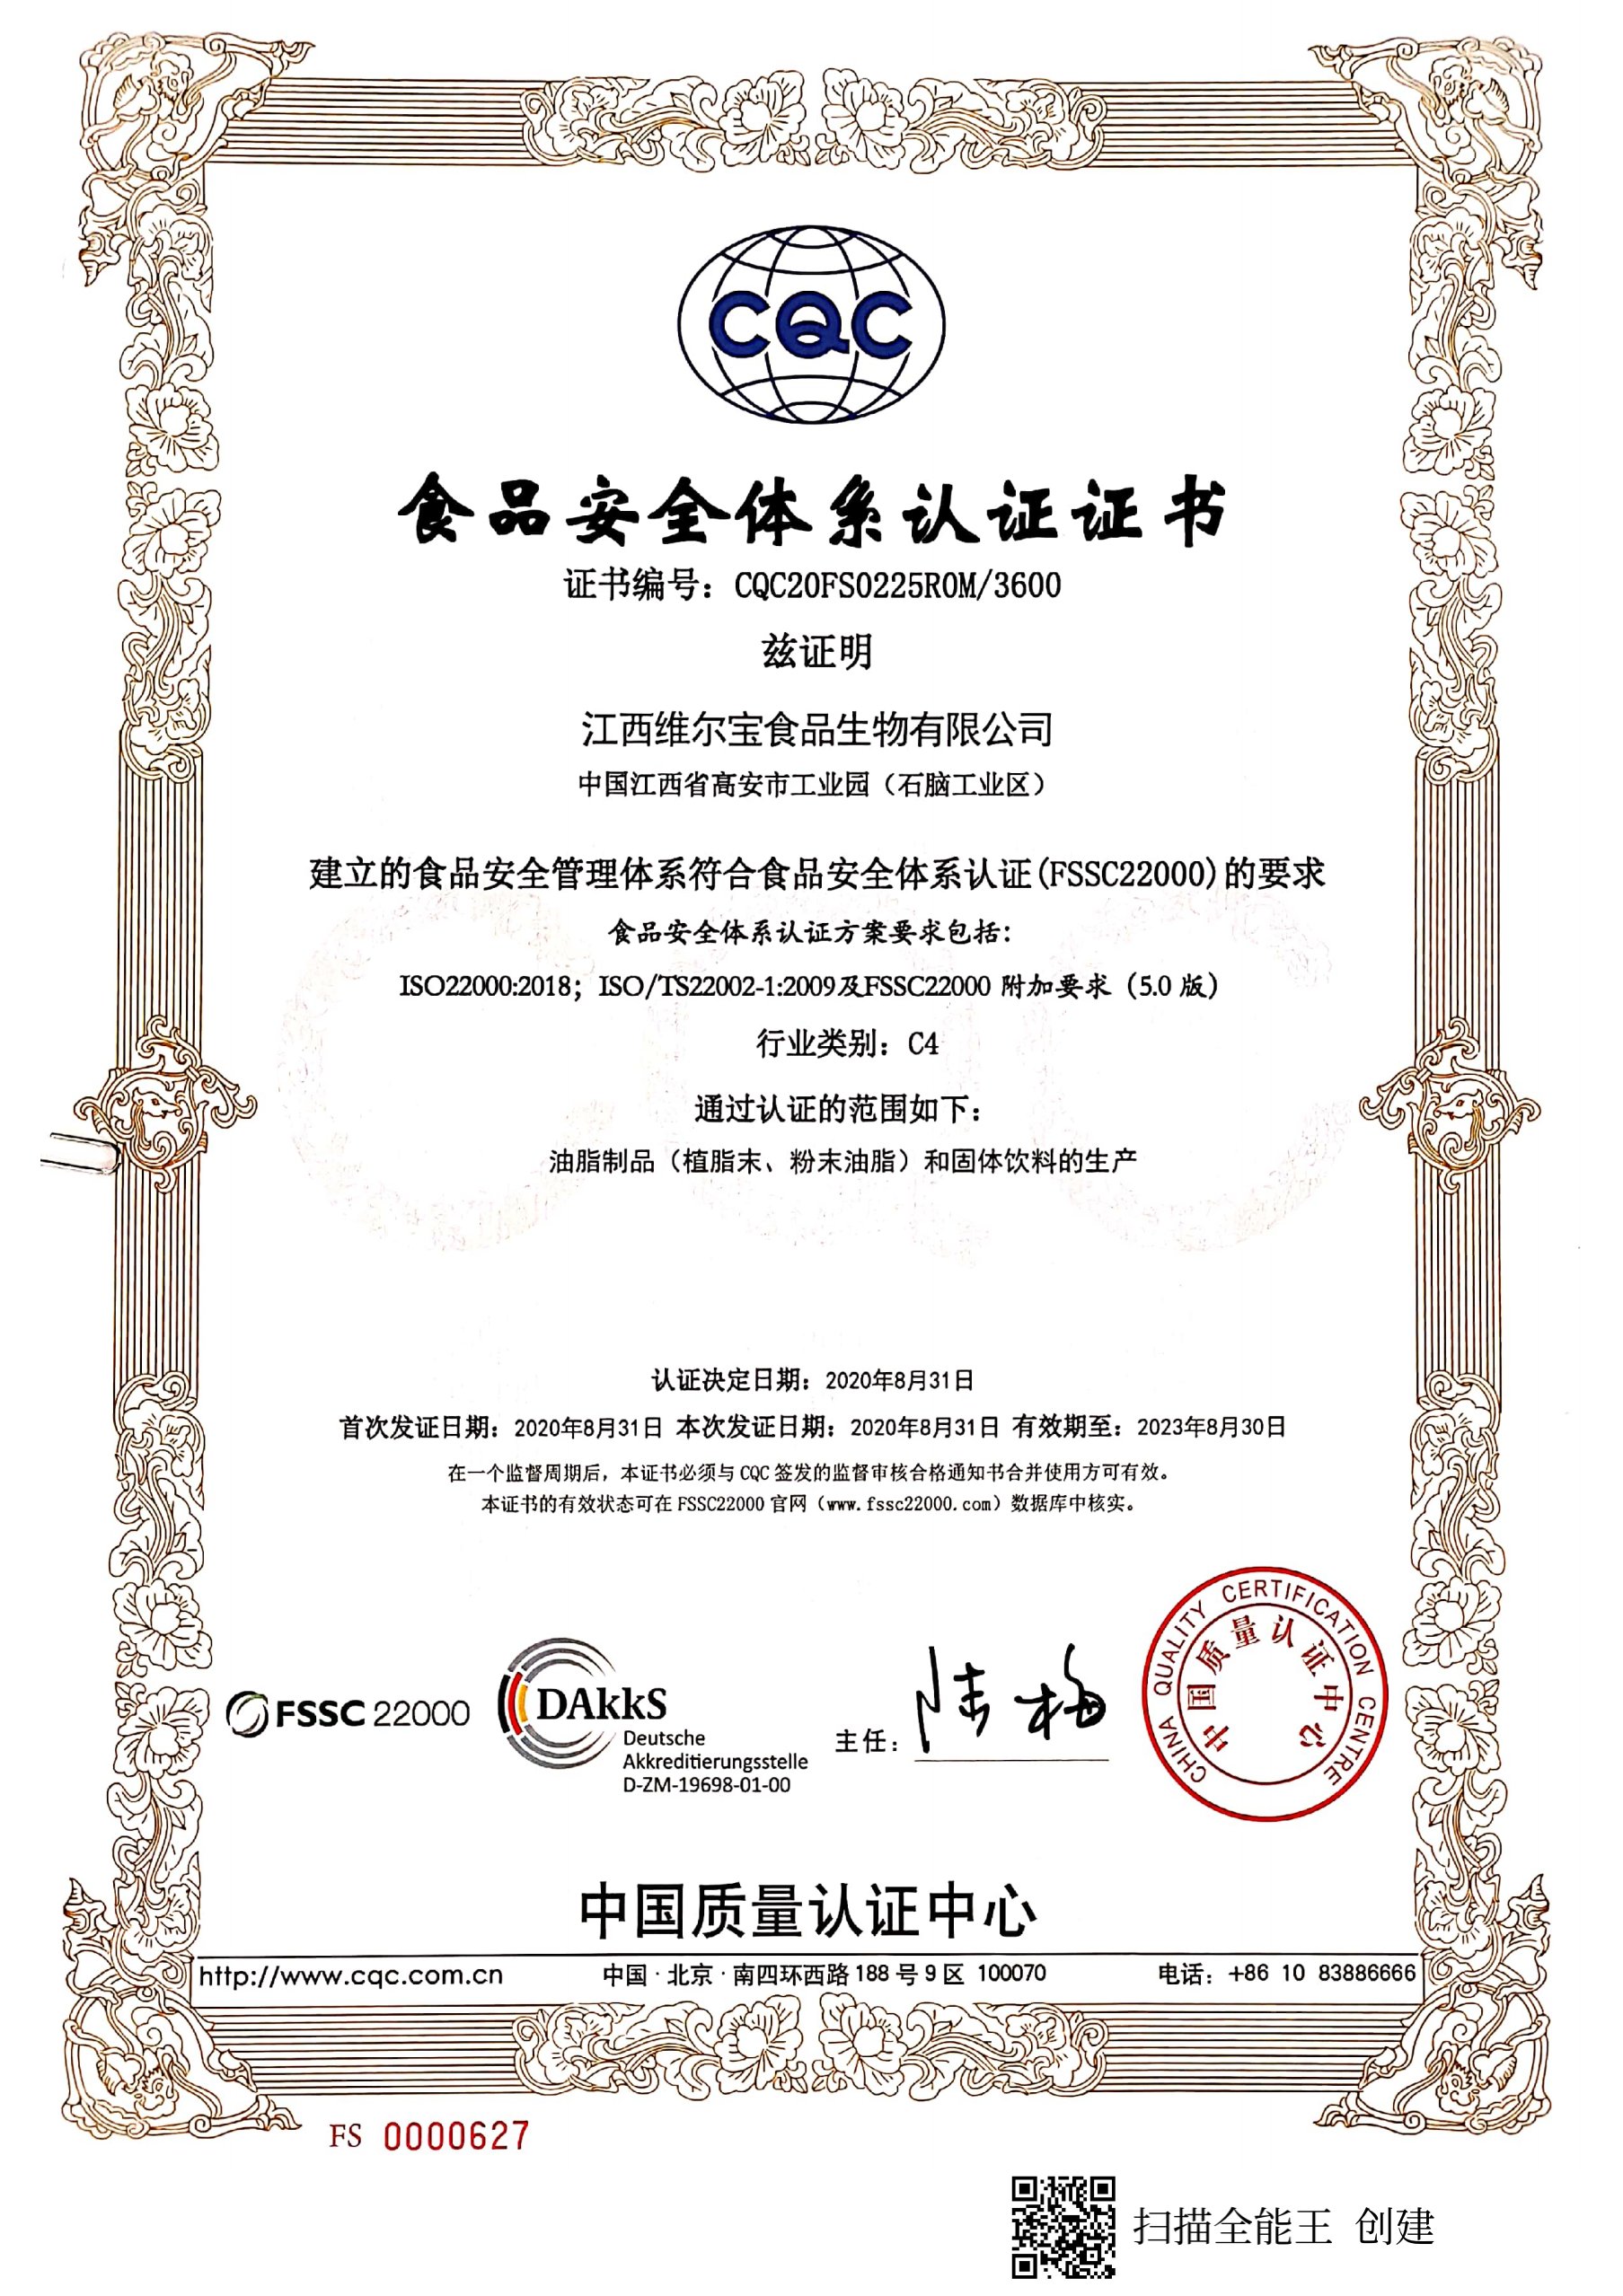 Jiangxi Weierbao Food Biology Co., Ltd. through the food safety system certification FSSC22000